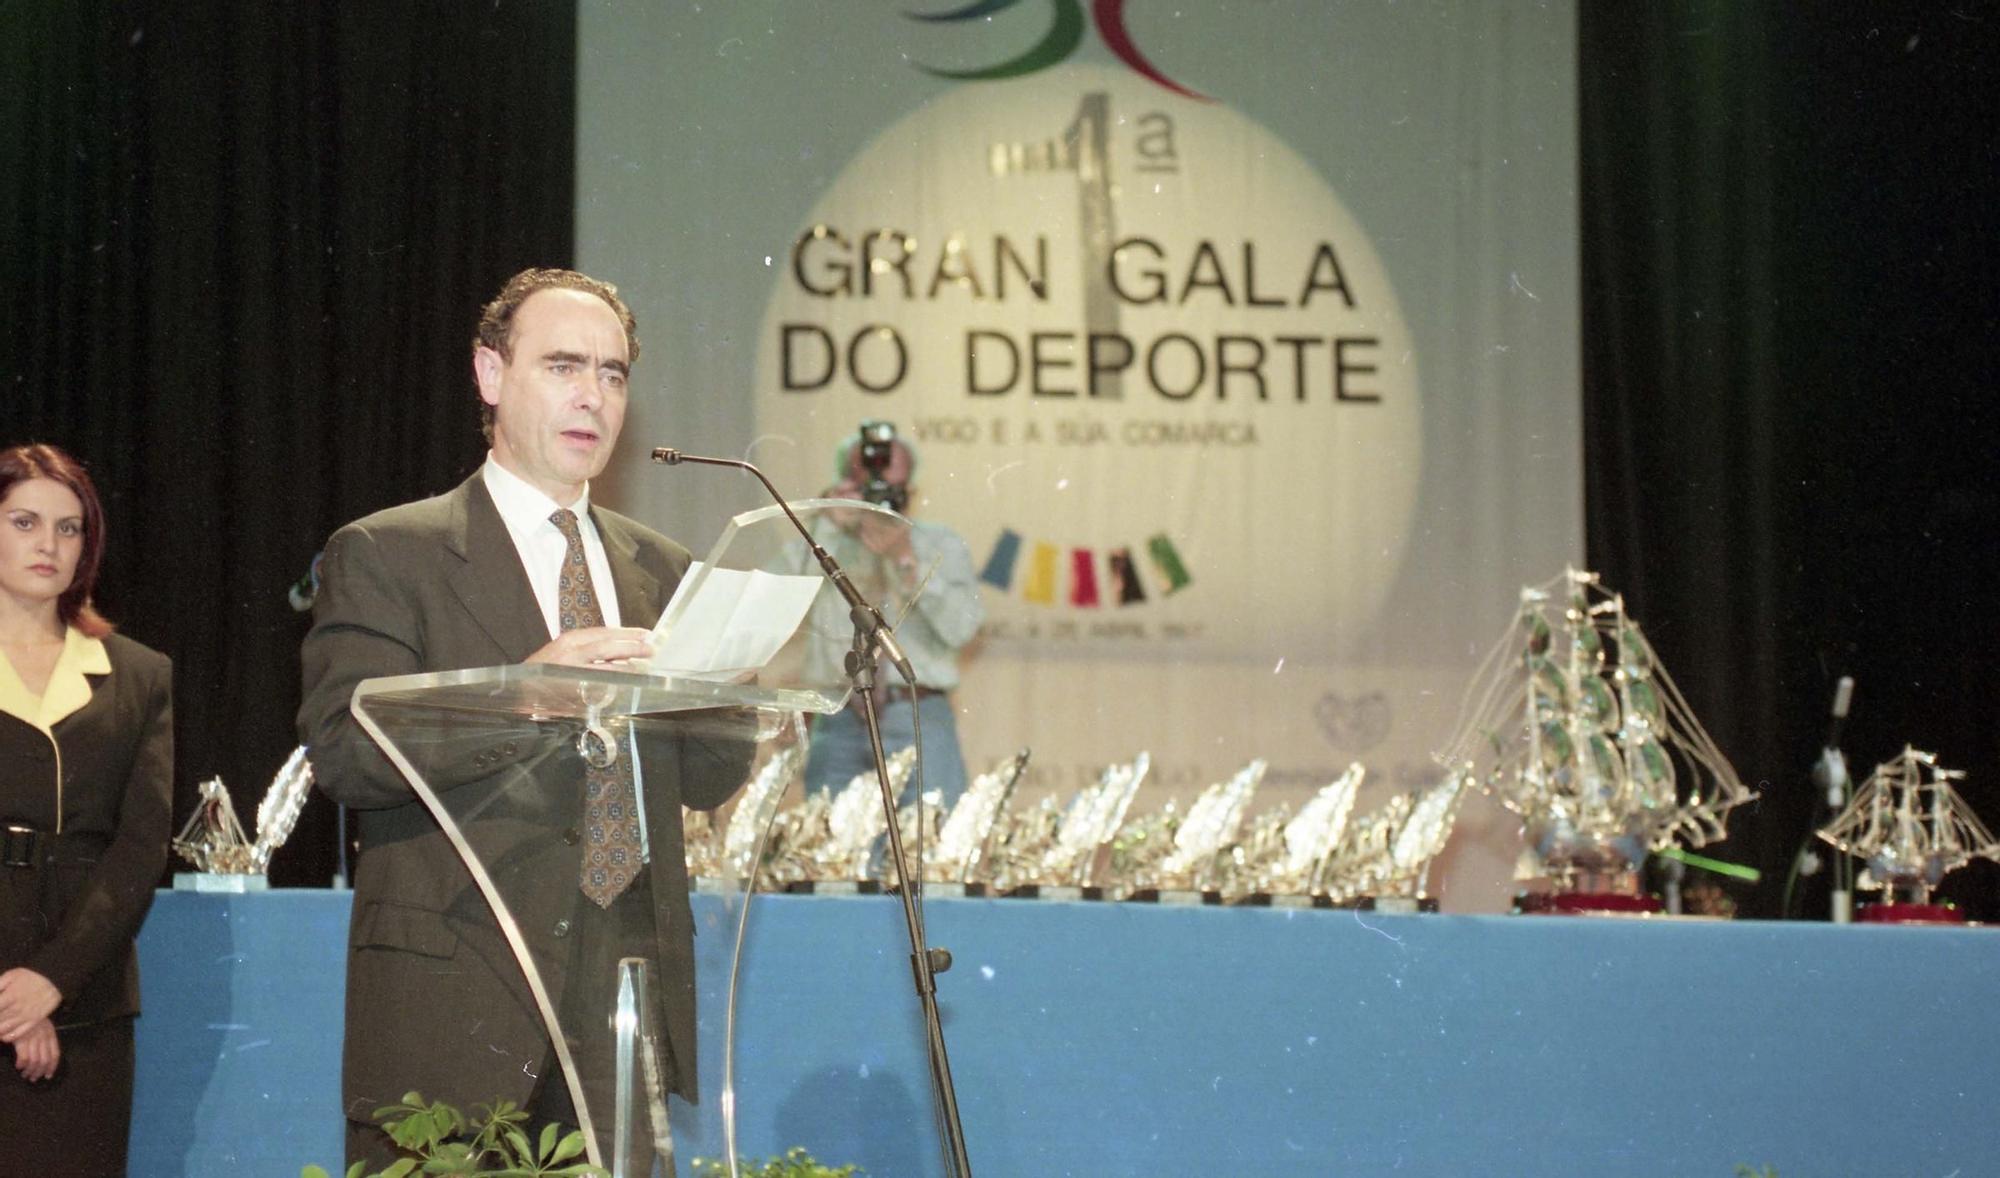 Celebración de la primera Gran Gala do Deporte de Vigo e a súa comarca celebrada en el recinto de Cotogrande en 1997 Magar.jpg